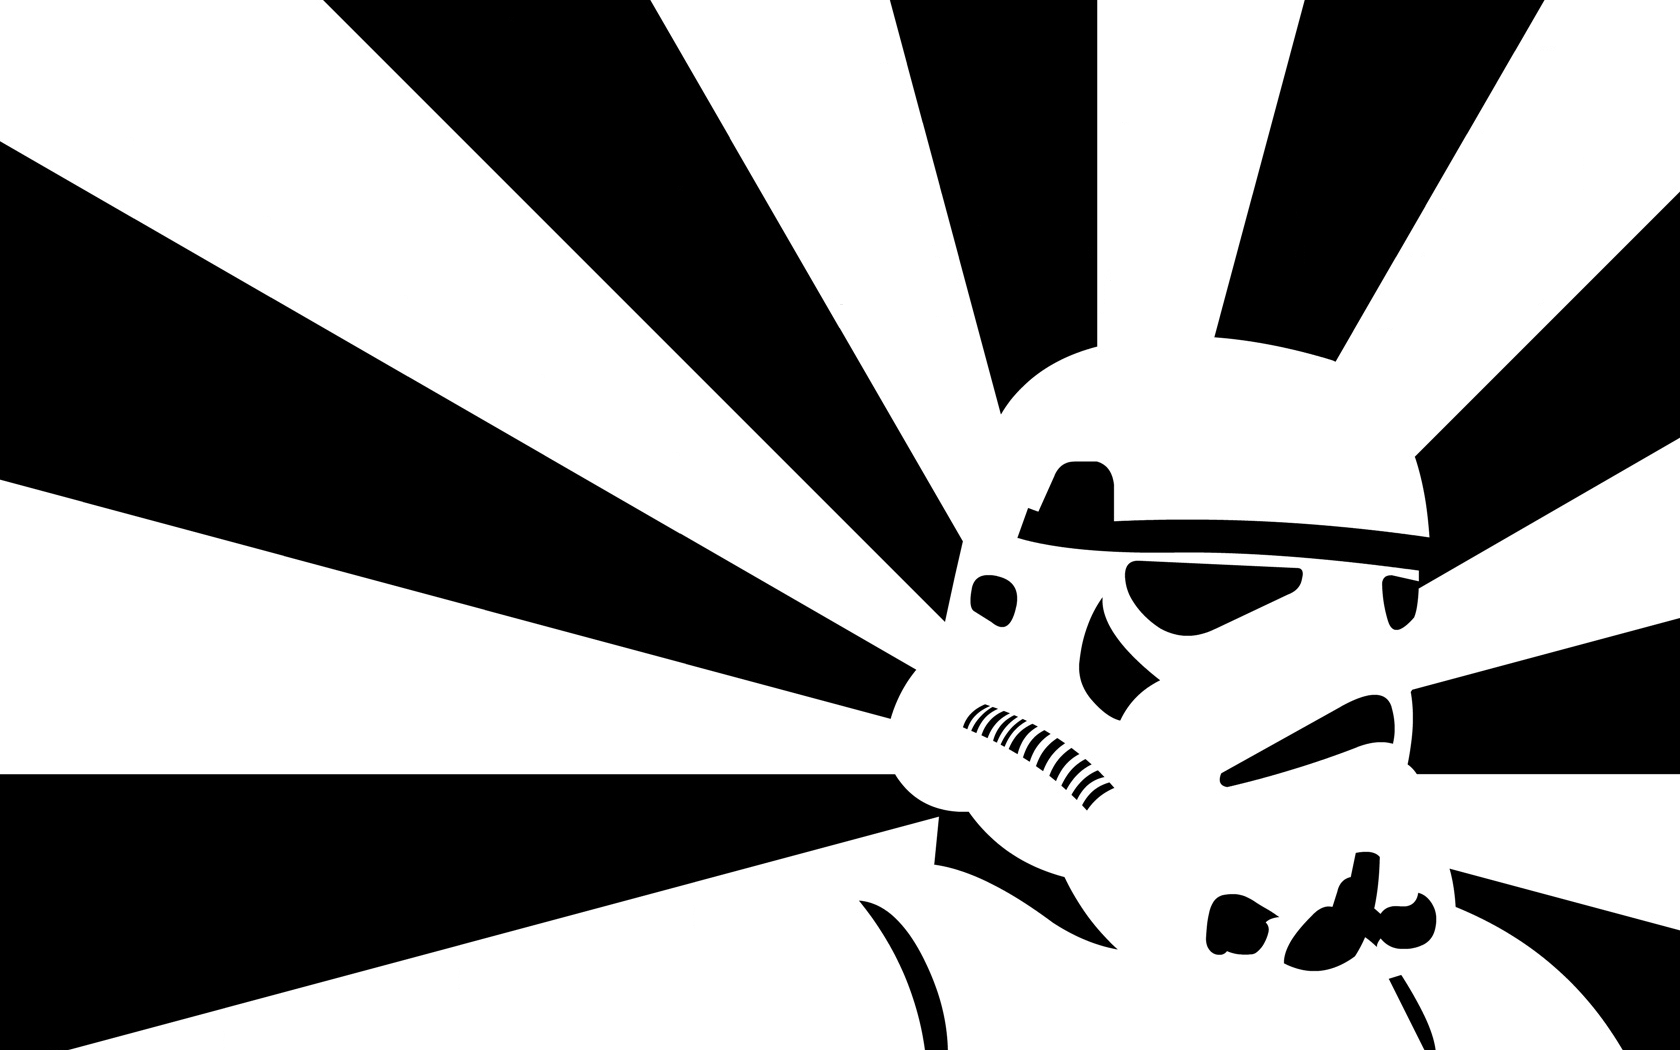 General 1680x1050 stormtrooper Star Wars helmet artwork minimalism Imperial Stormtrooper science fiction monochrome